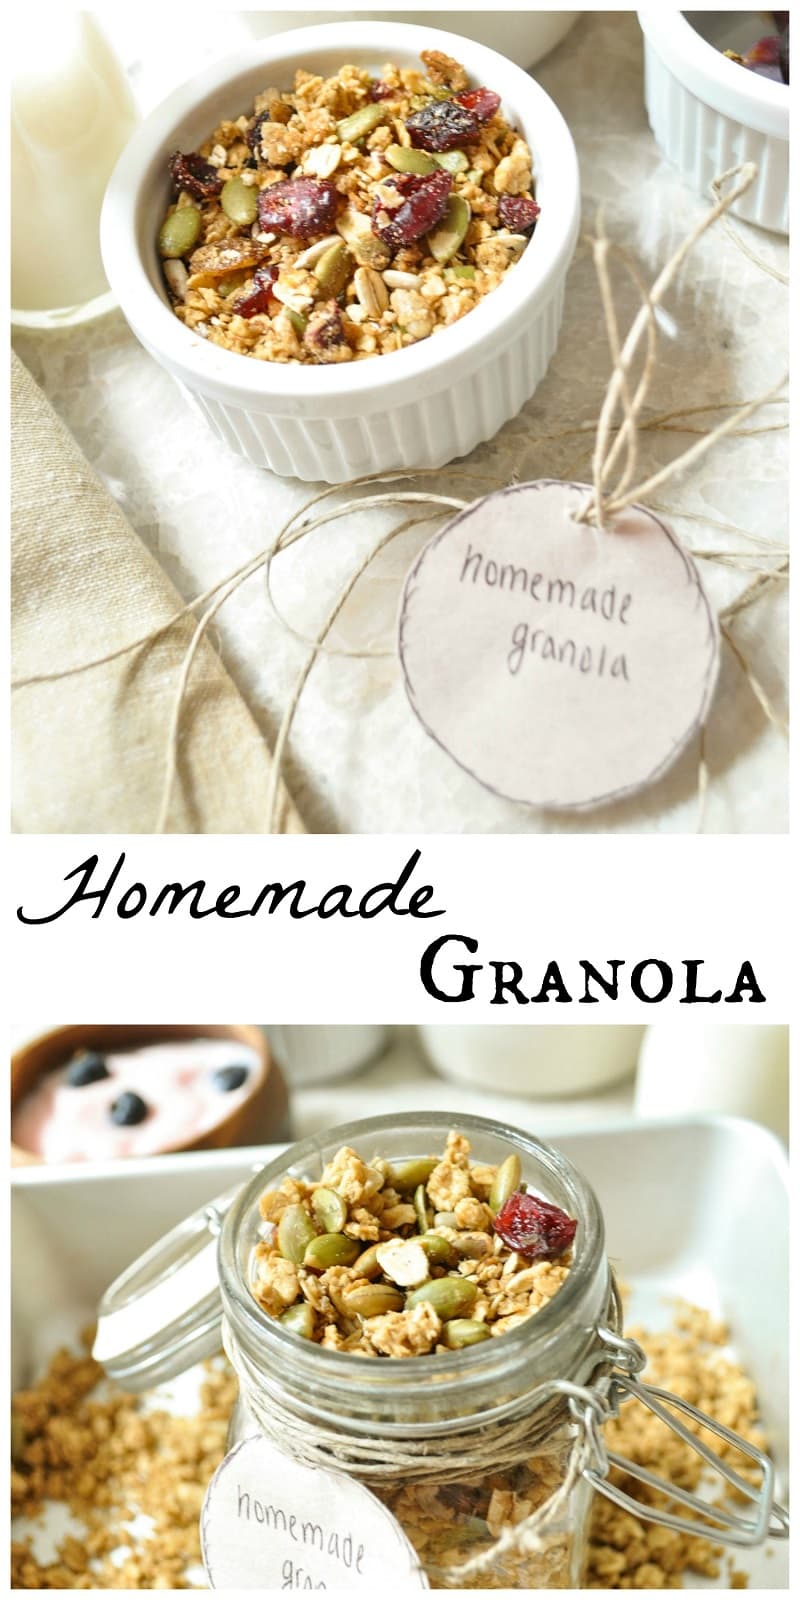 How to Make Granola at Home?